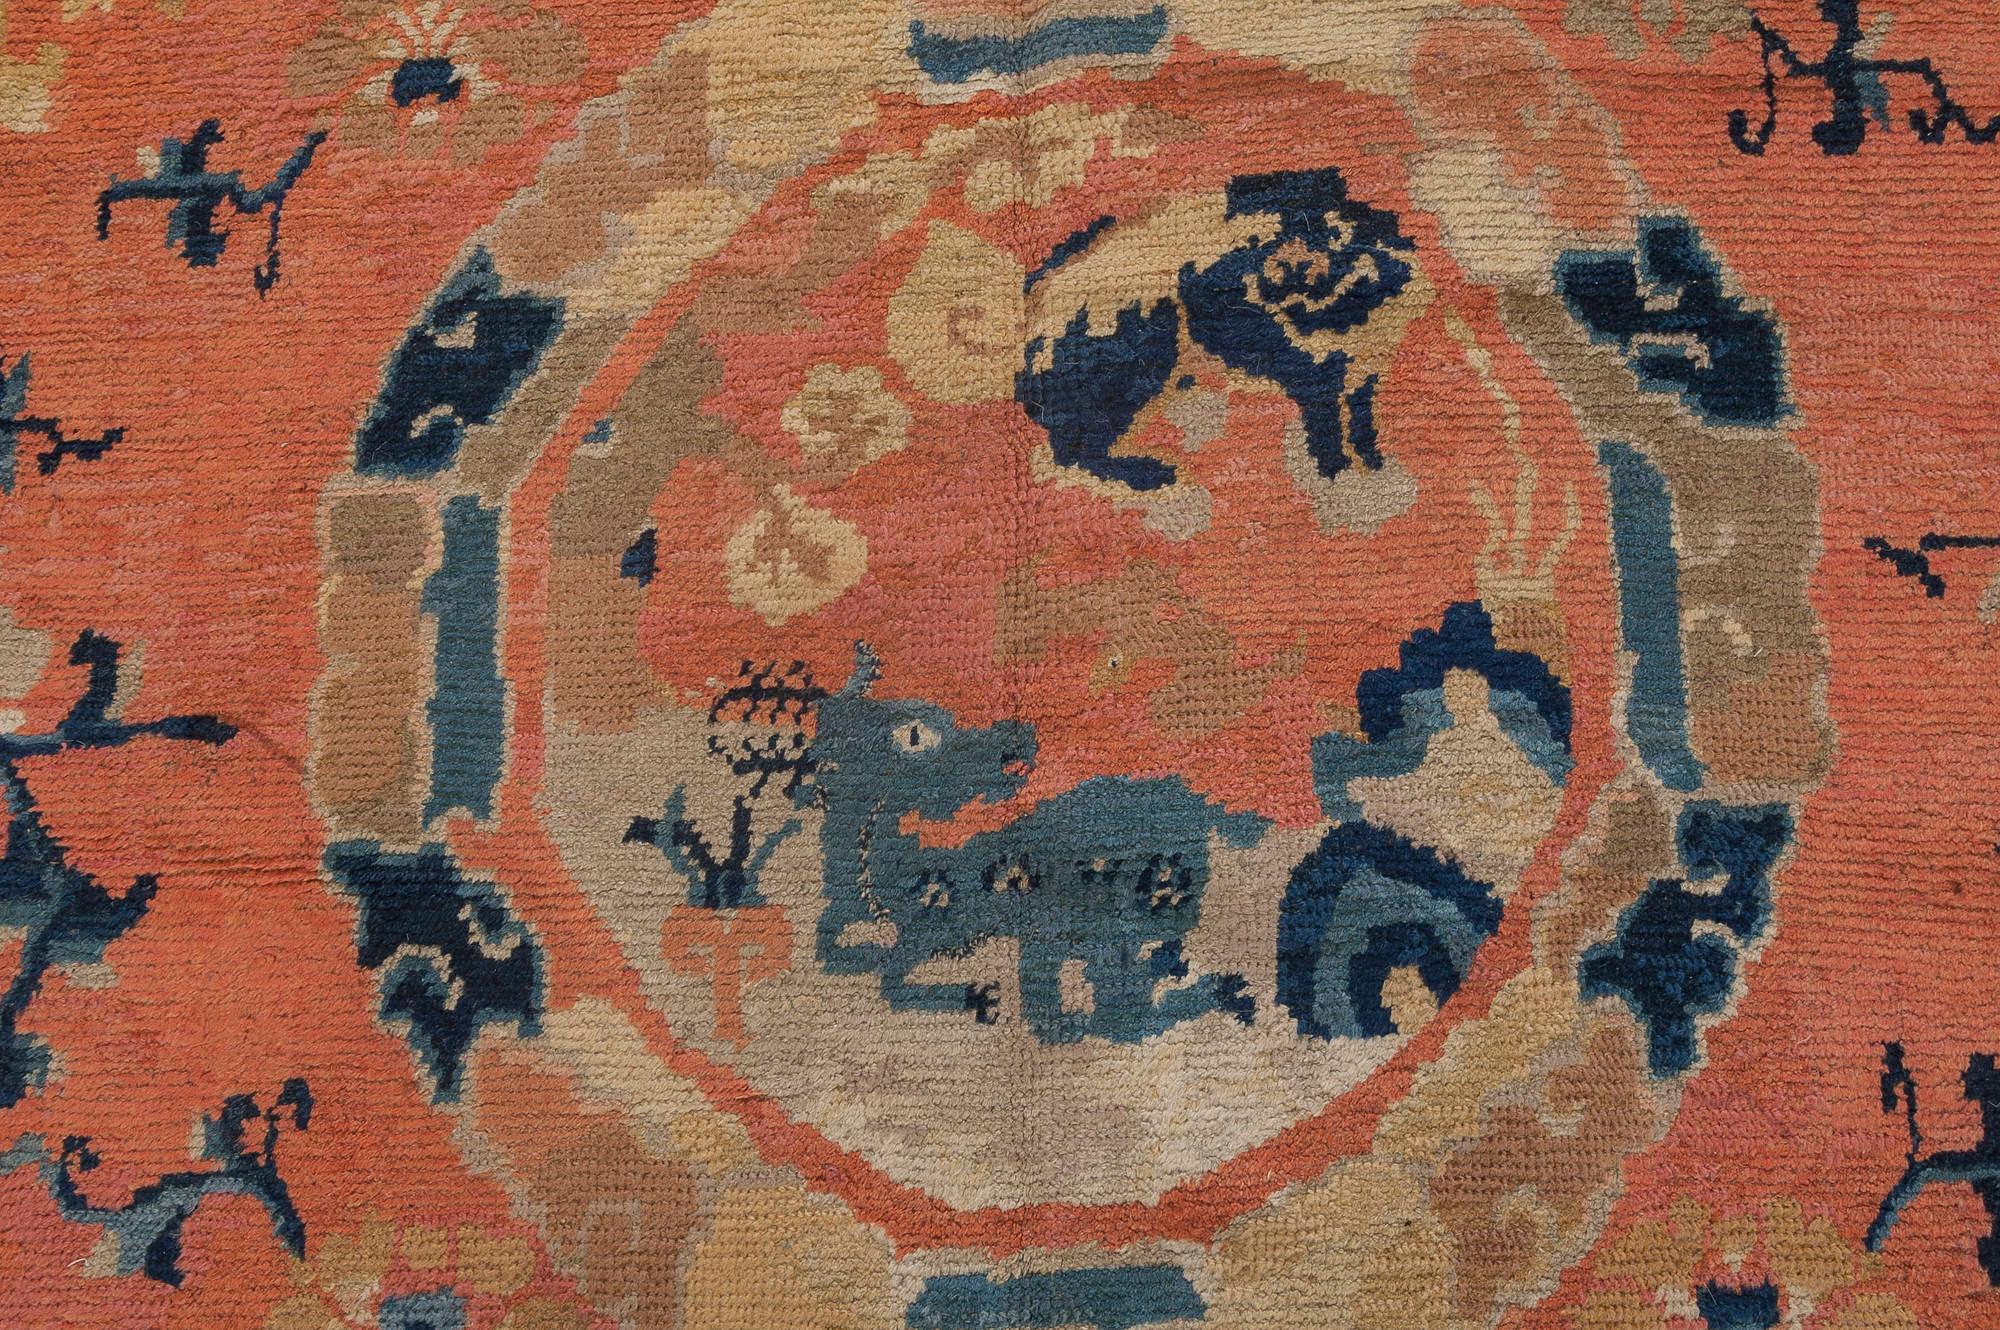 19th century Chinese salmon, blue handmade wool carpet
Size: 7'7